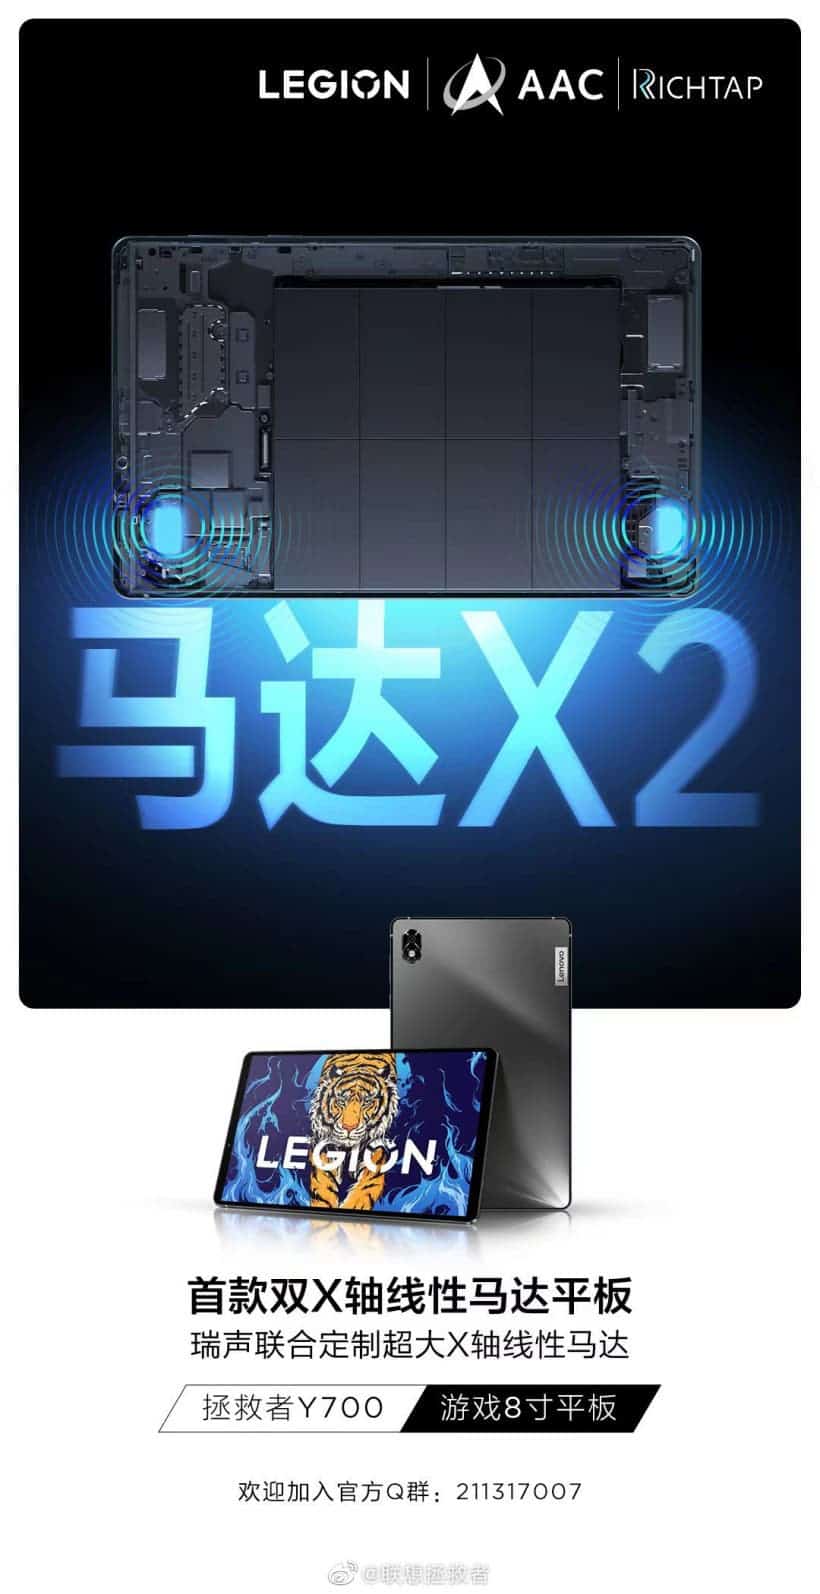 Lenovo Legion Y700 Specifications 2 جوان آی تی